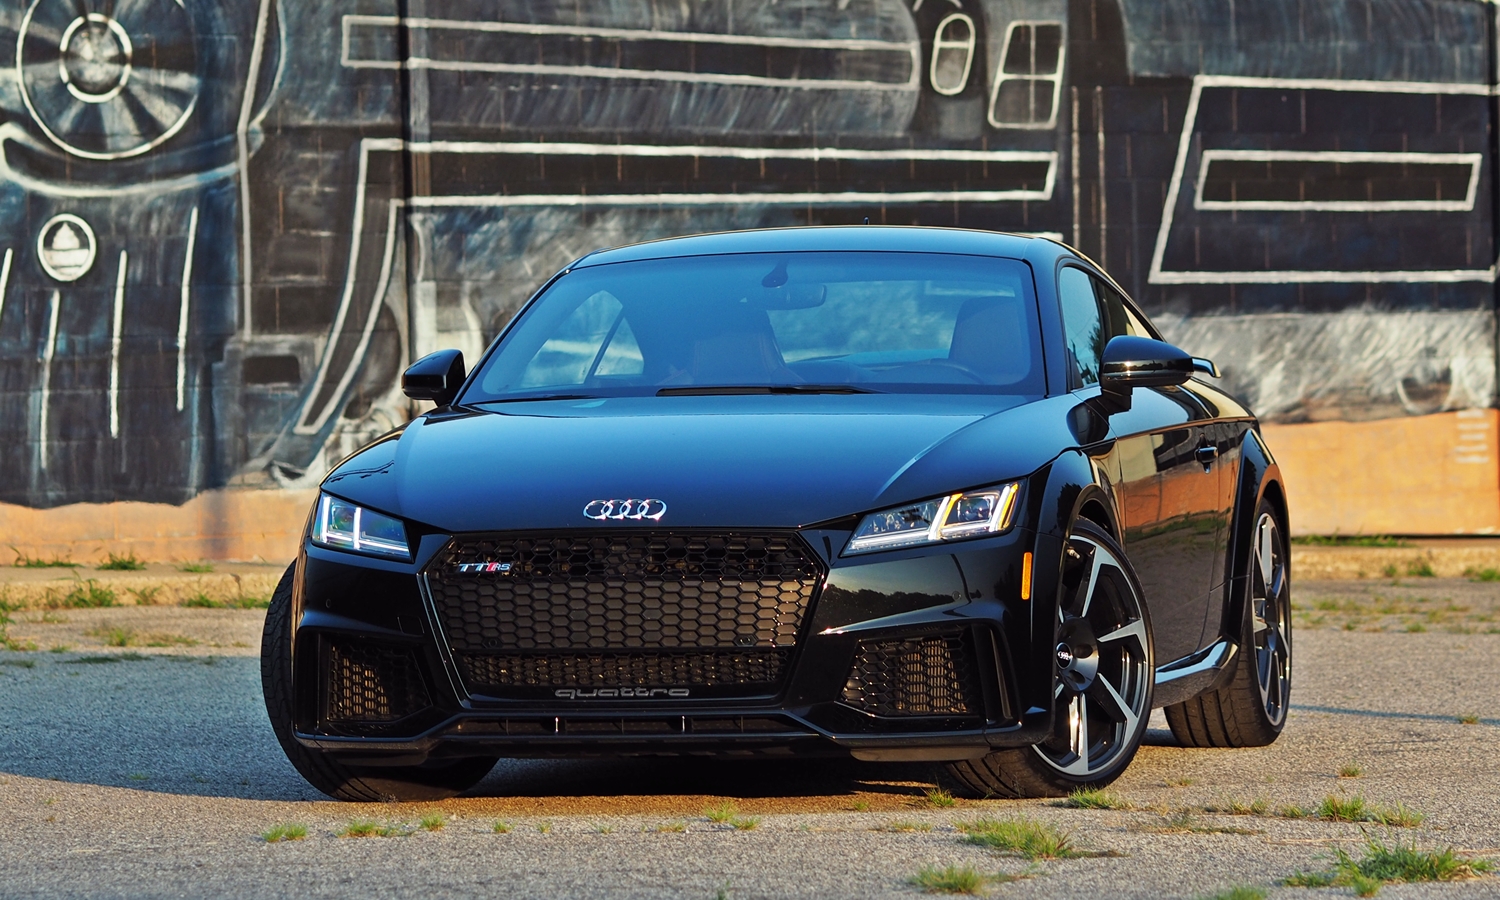 TT Reviews: Audi TT RS front view